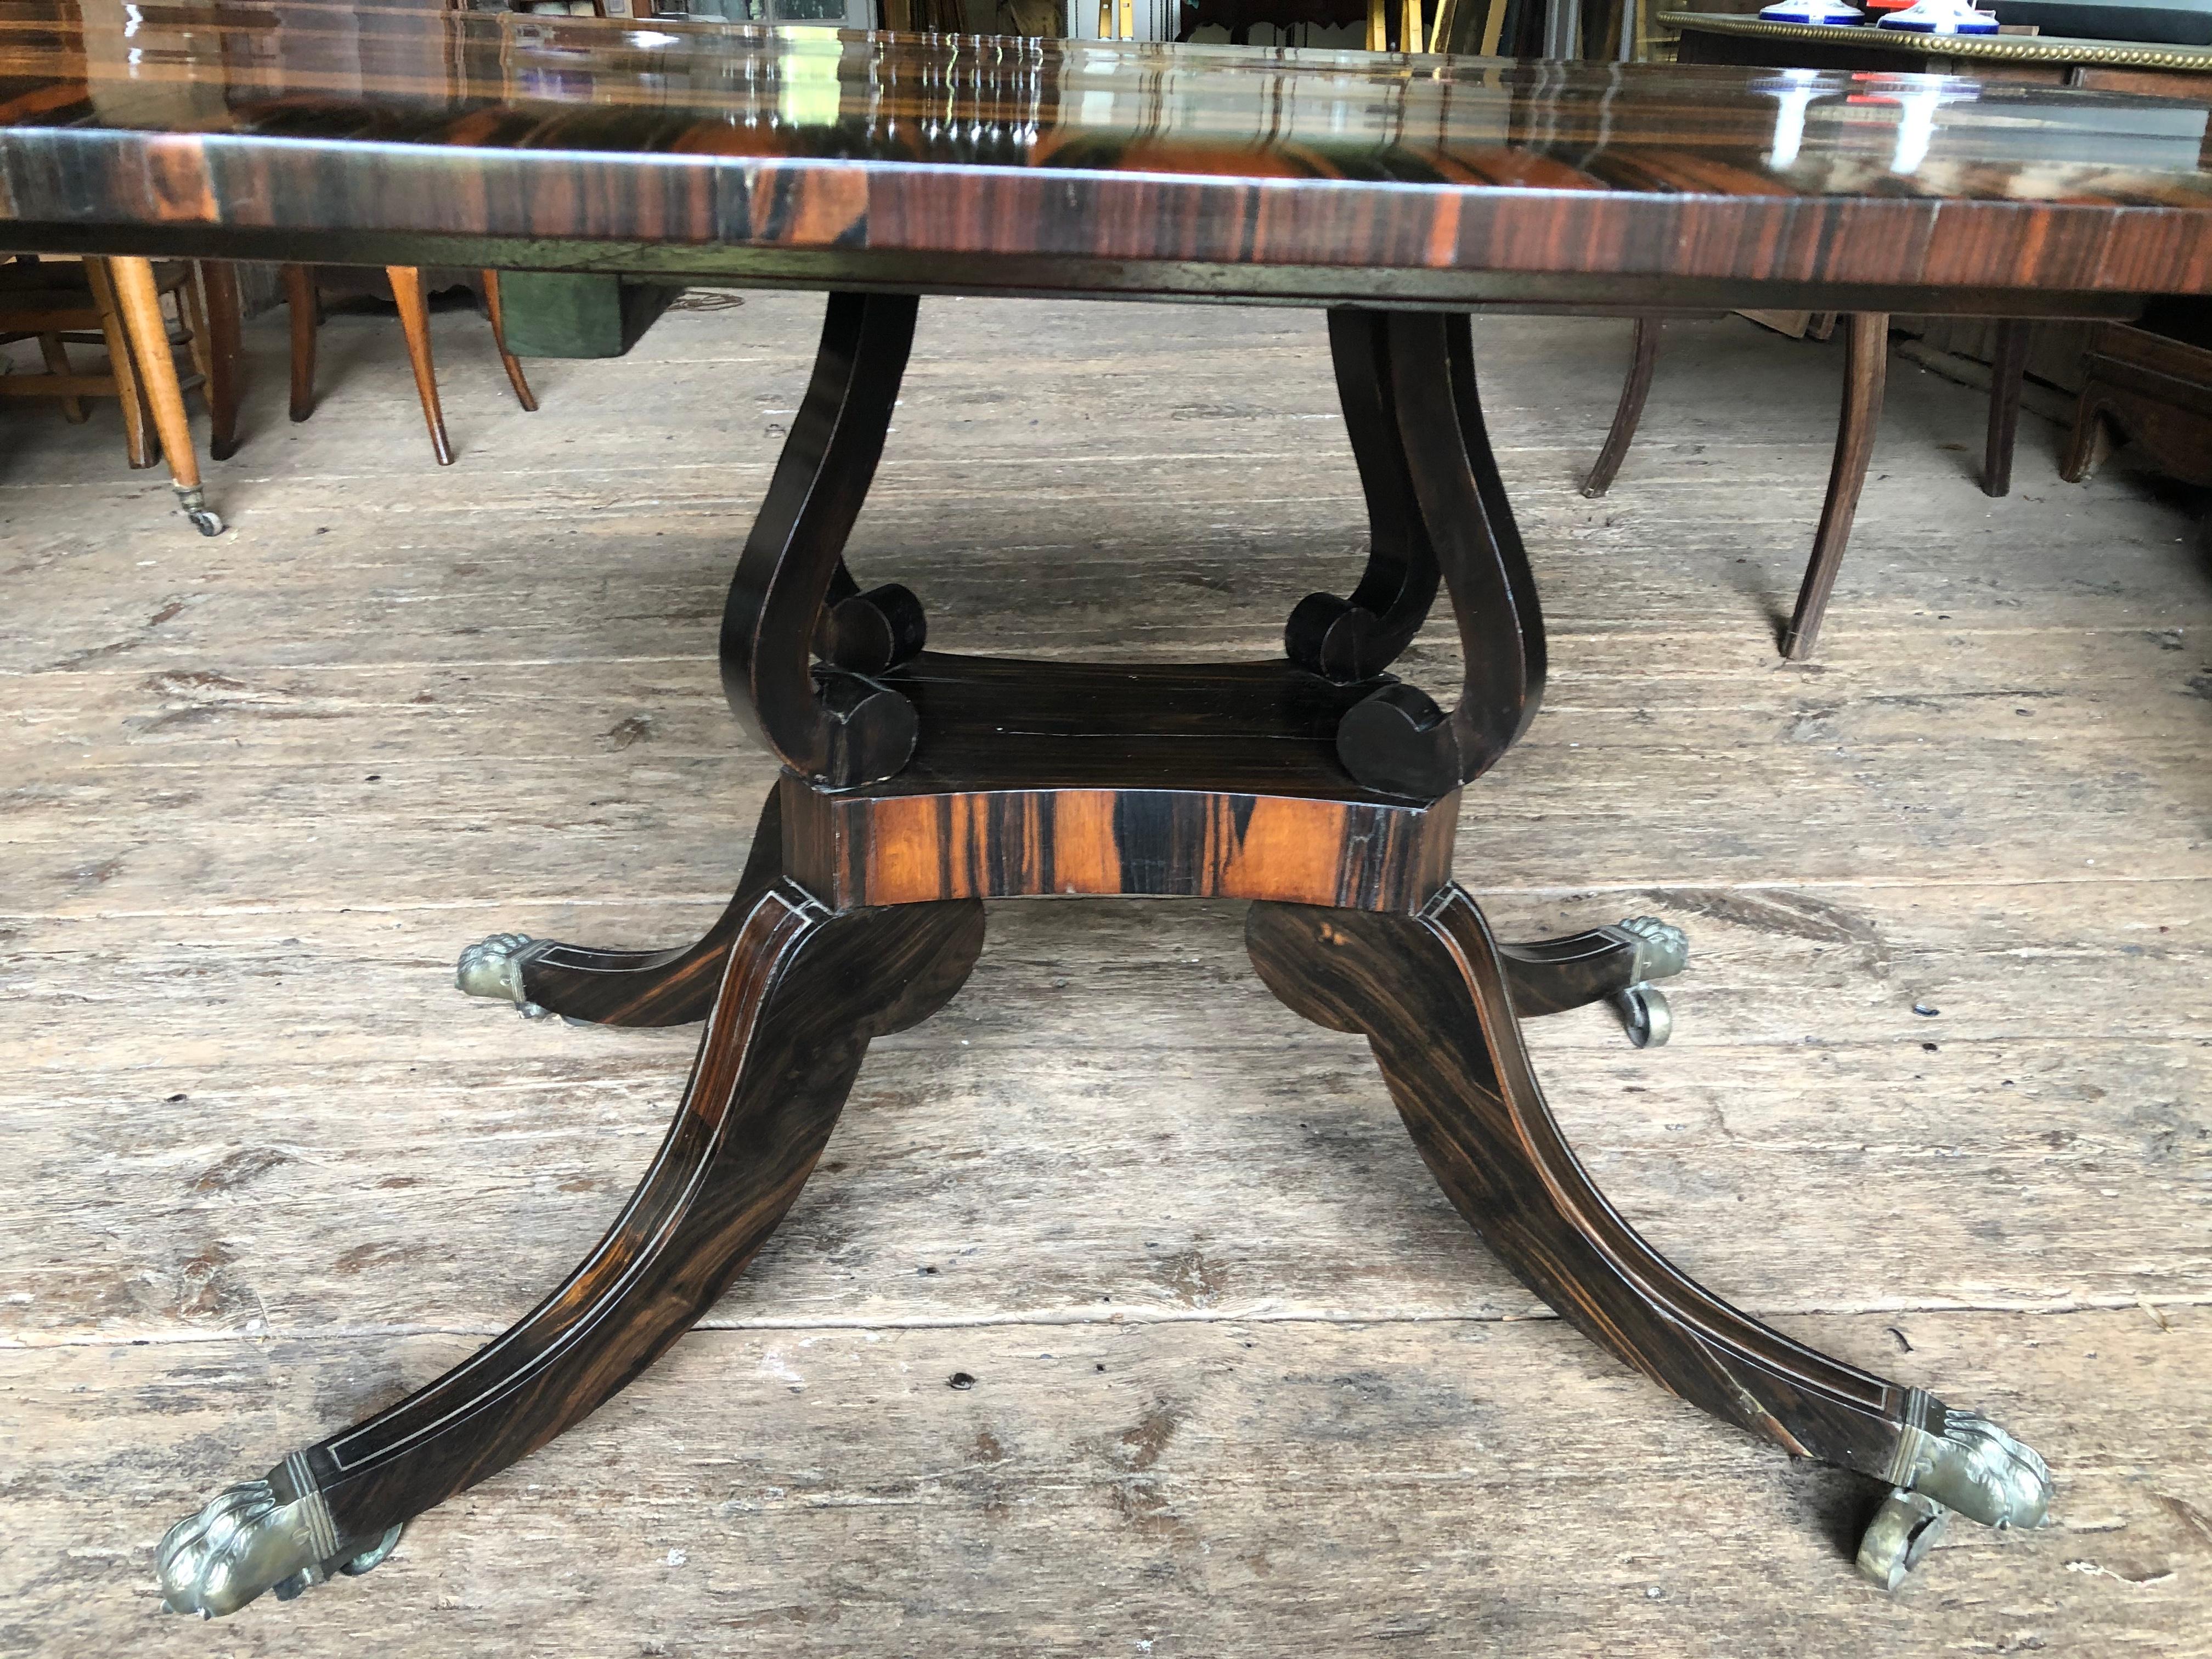 An English Regency tilt-top tea table, circa 1820, in Calamander wood veneer, with a four leg 